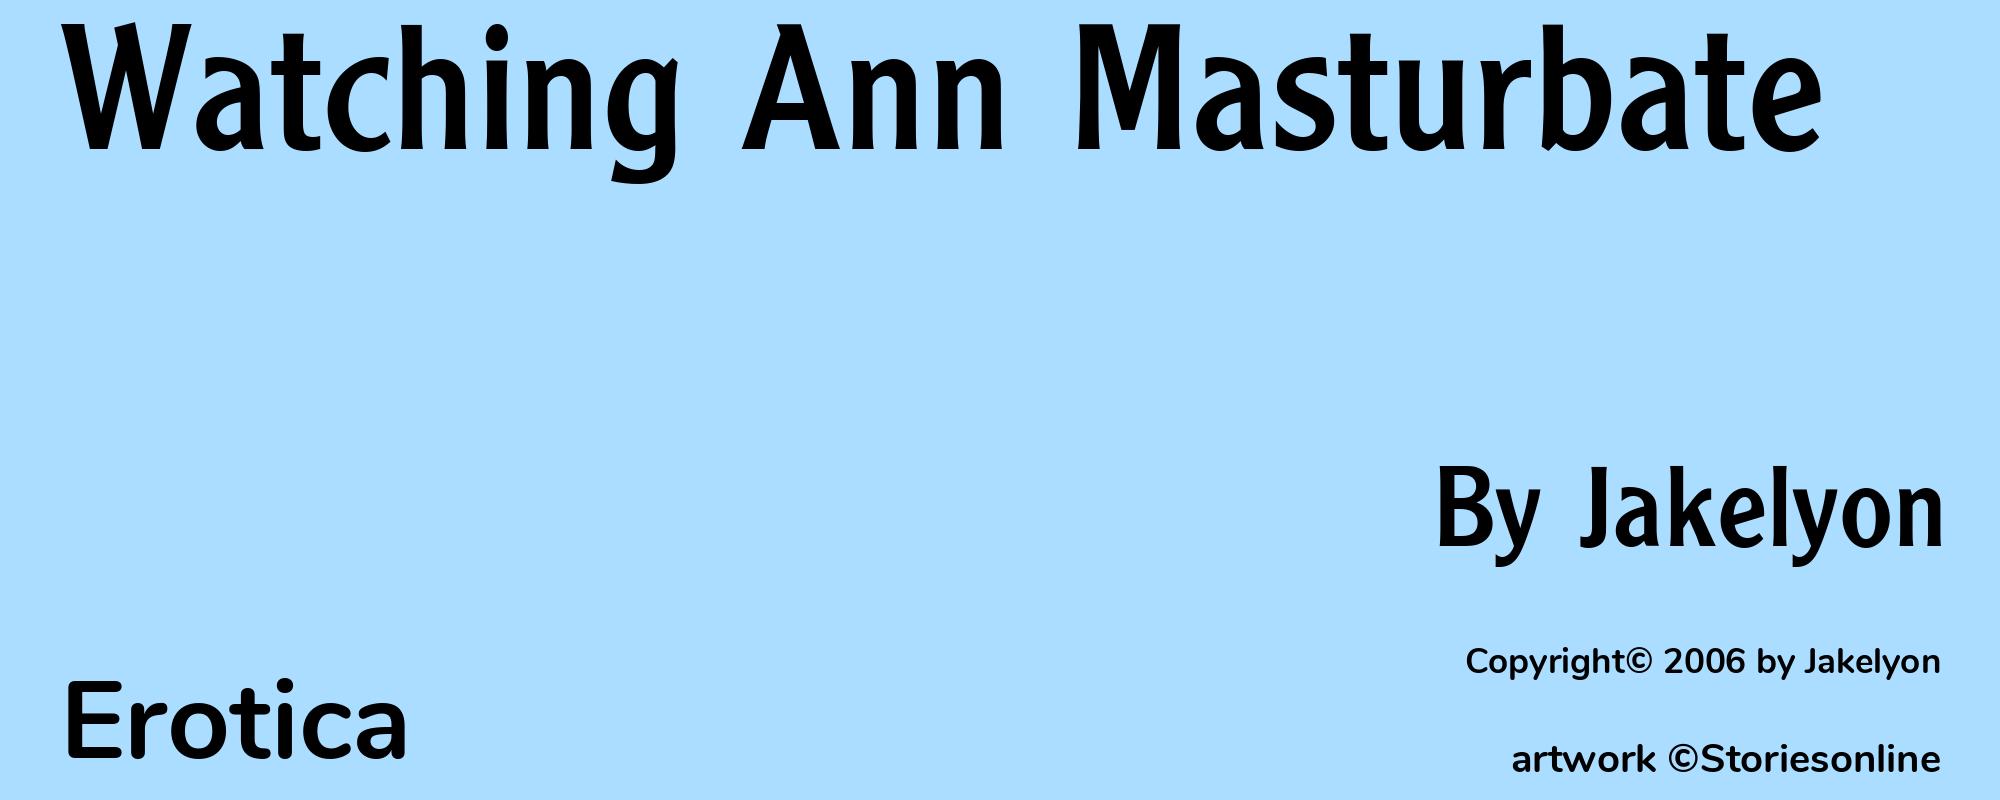 Watching Ann Masturbate - Cover